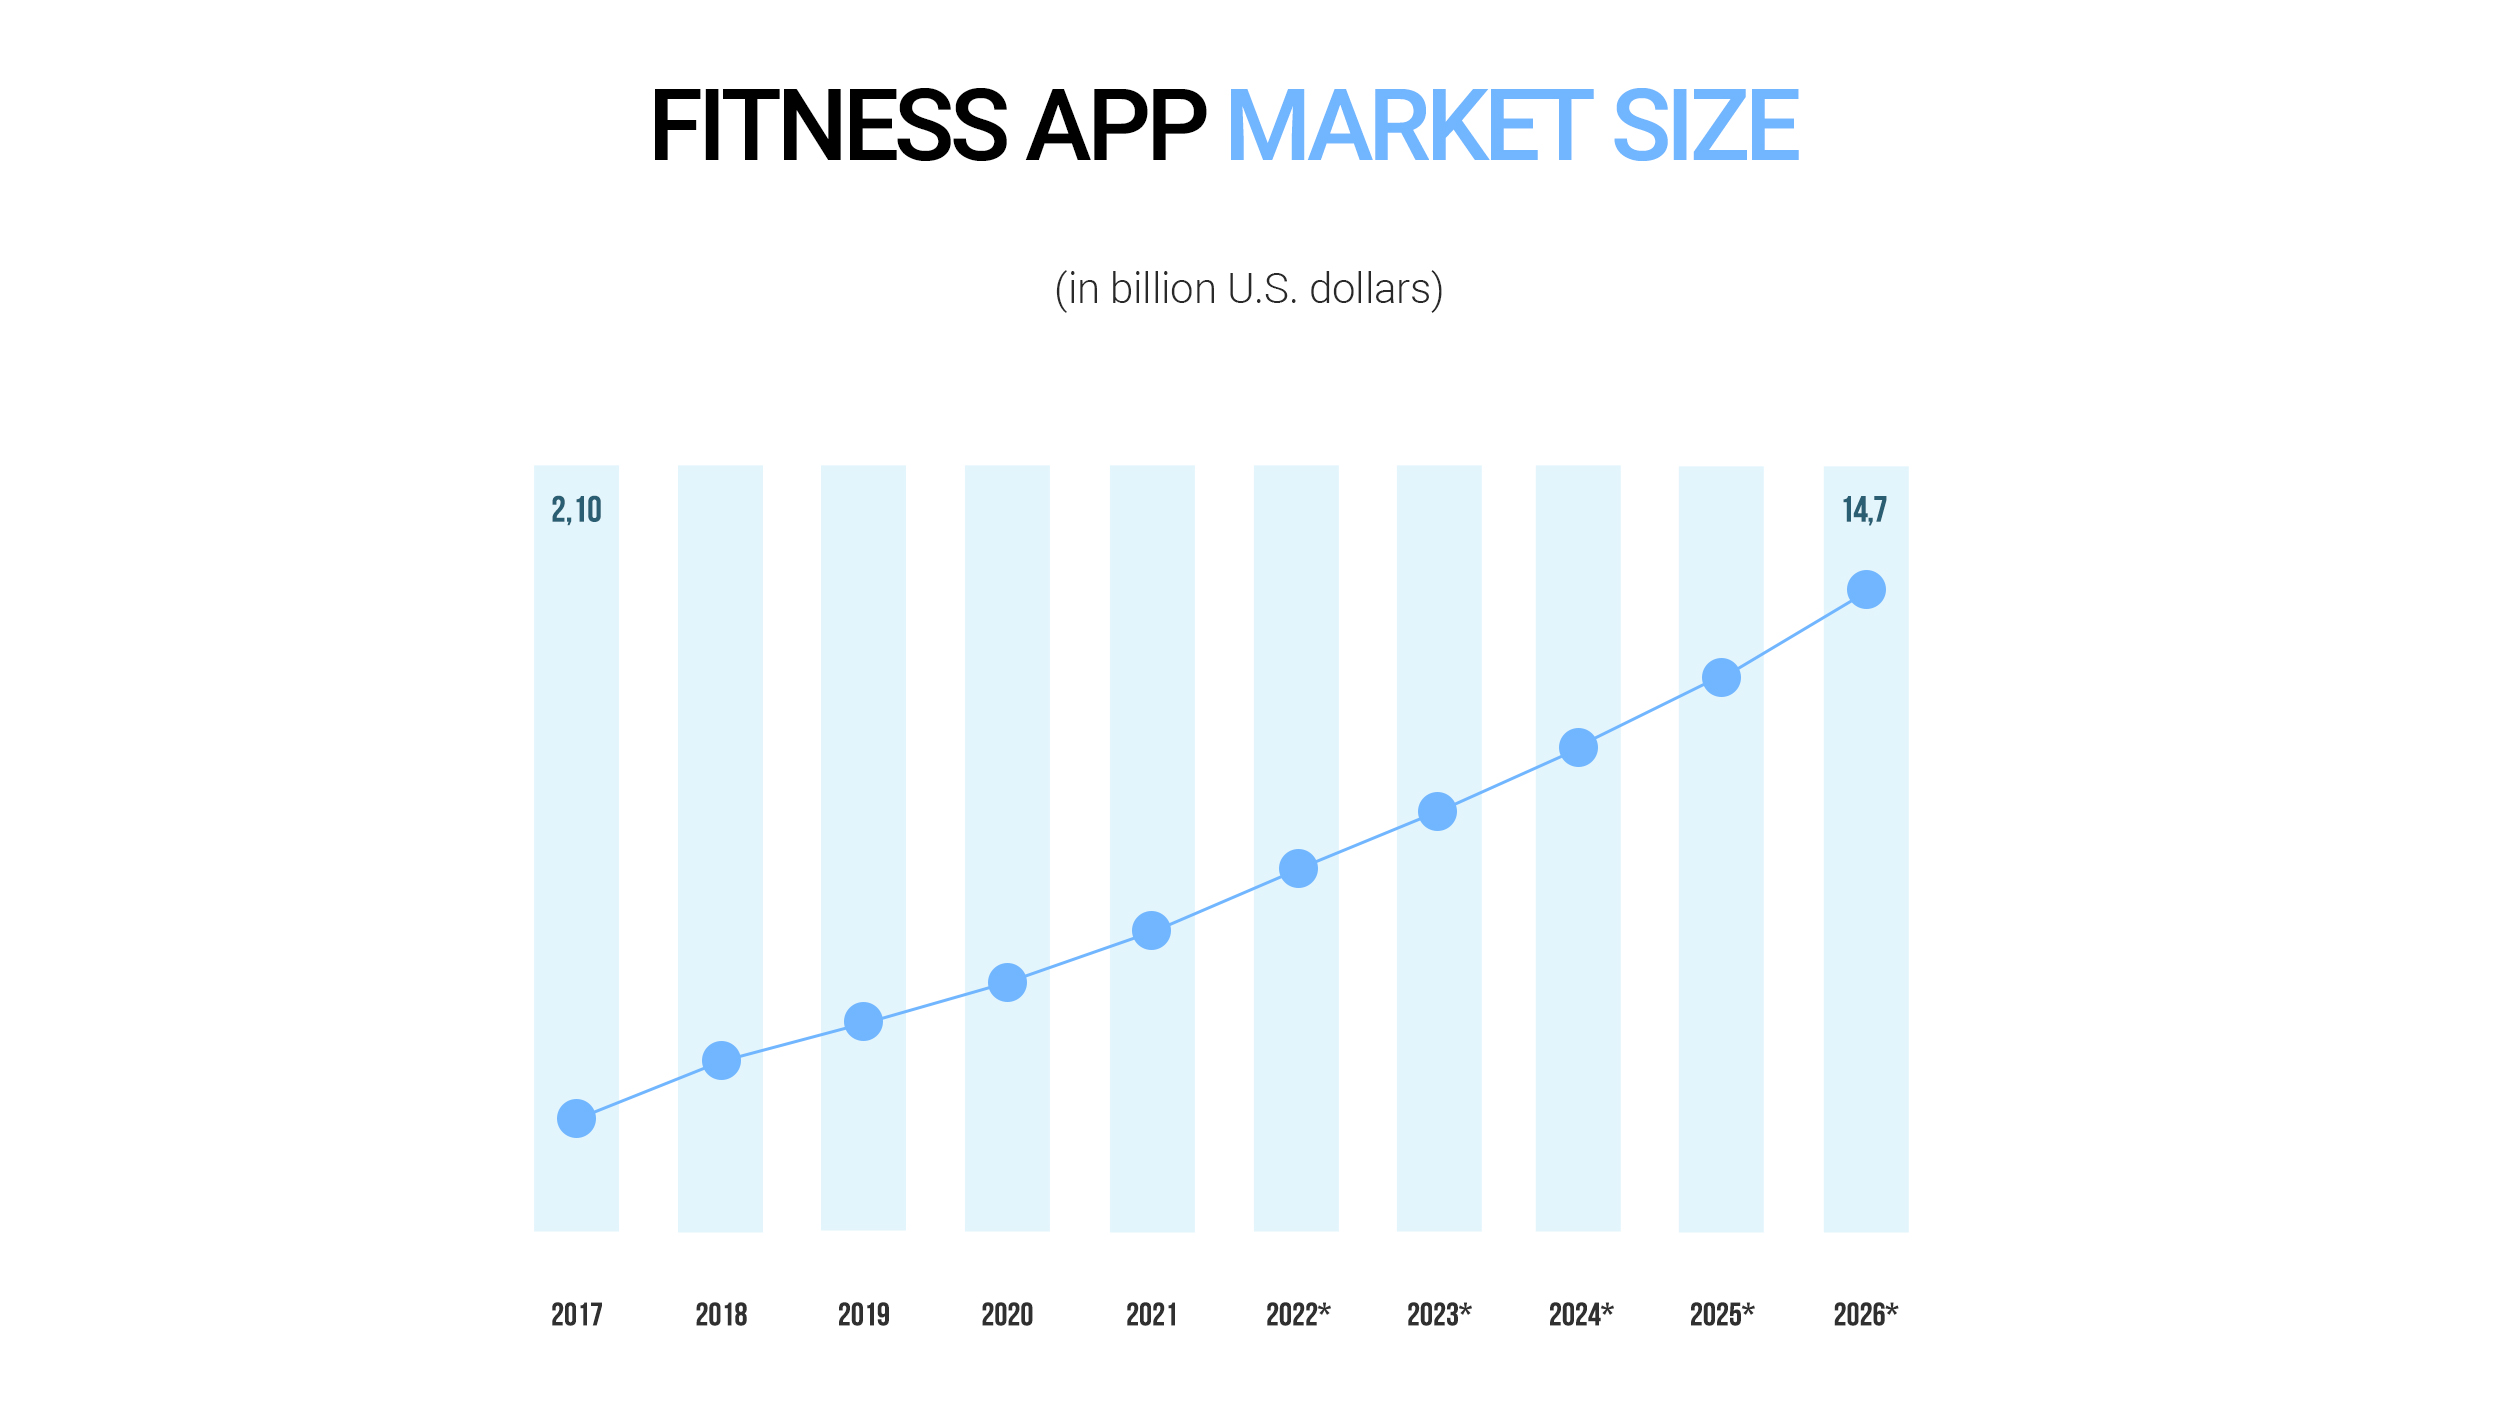 Fitness app market size growth